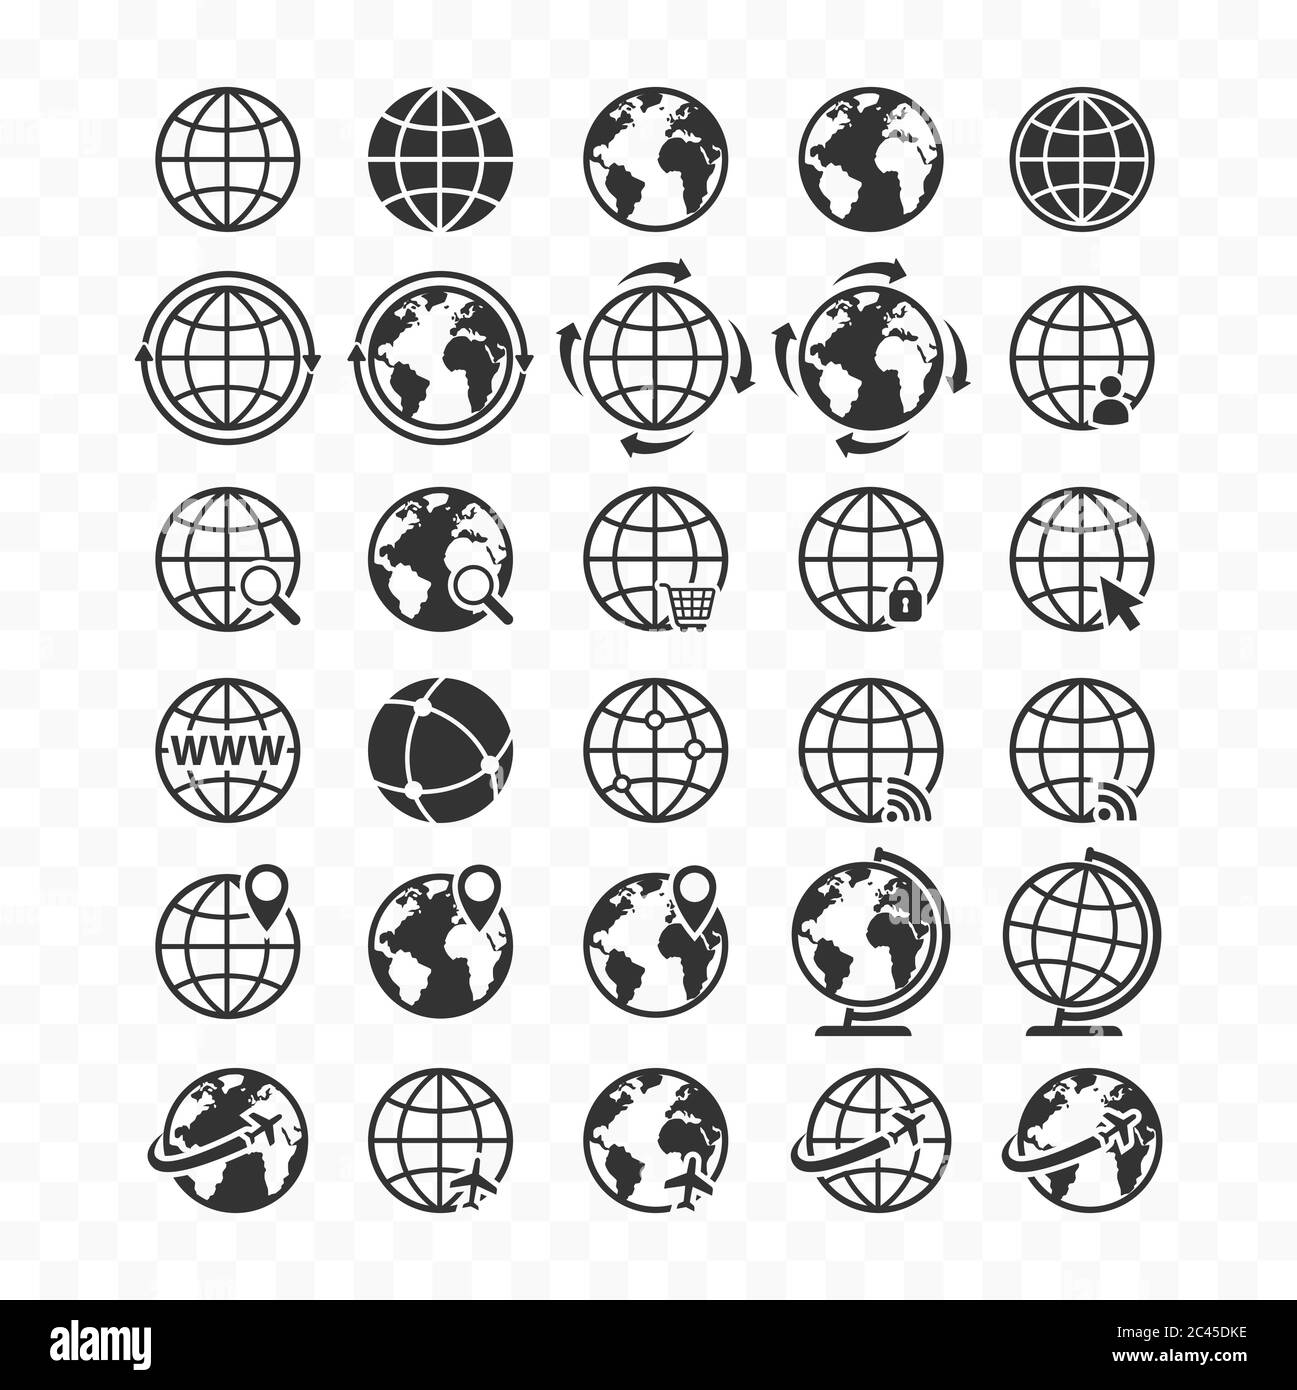 Globe Web Icon Set. Planet Erde Symbole für Websites. Stock Vektor